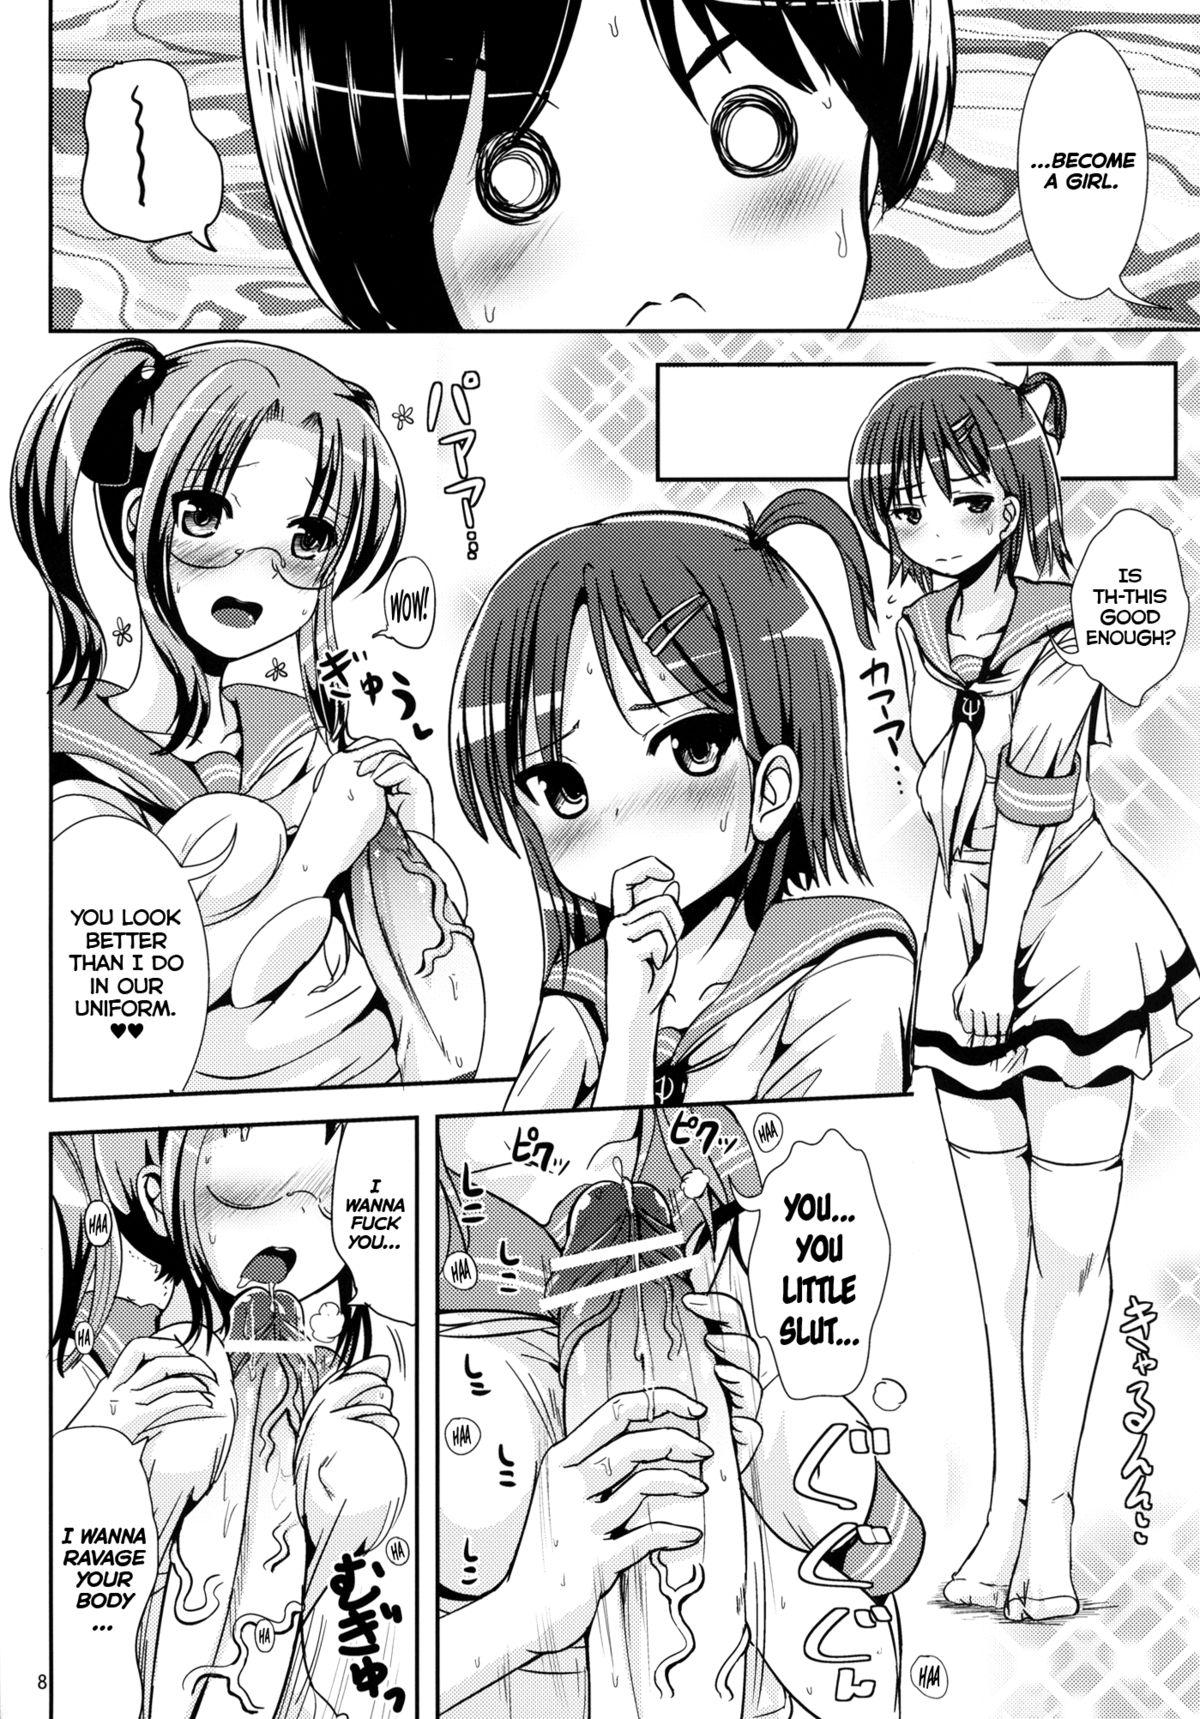 Adorable Rouka-kei Hitaishou Girl | The Abnormal Wallflower Sucking Cock - Page 8